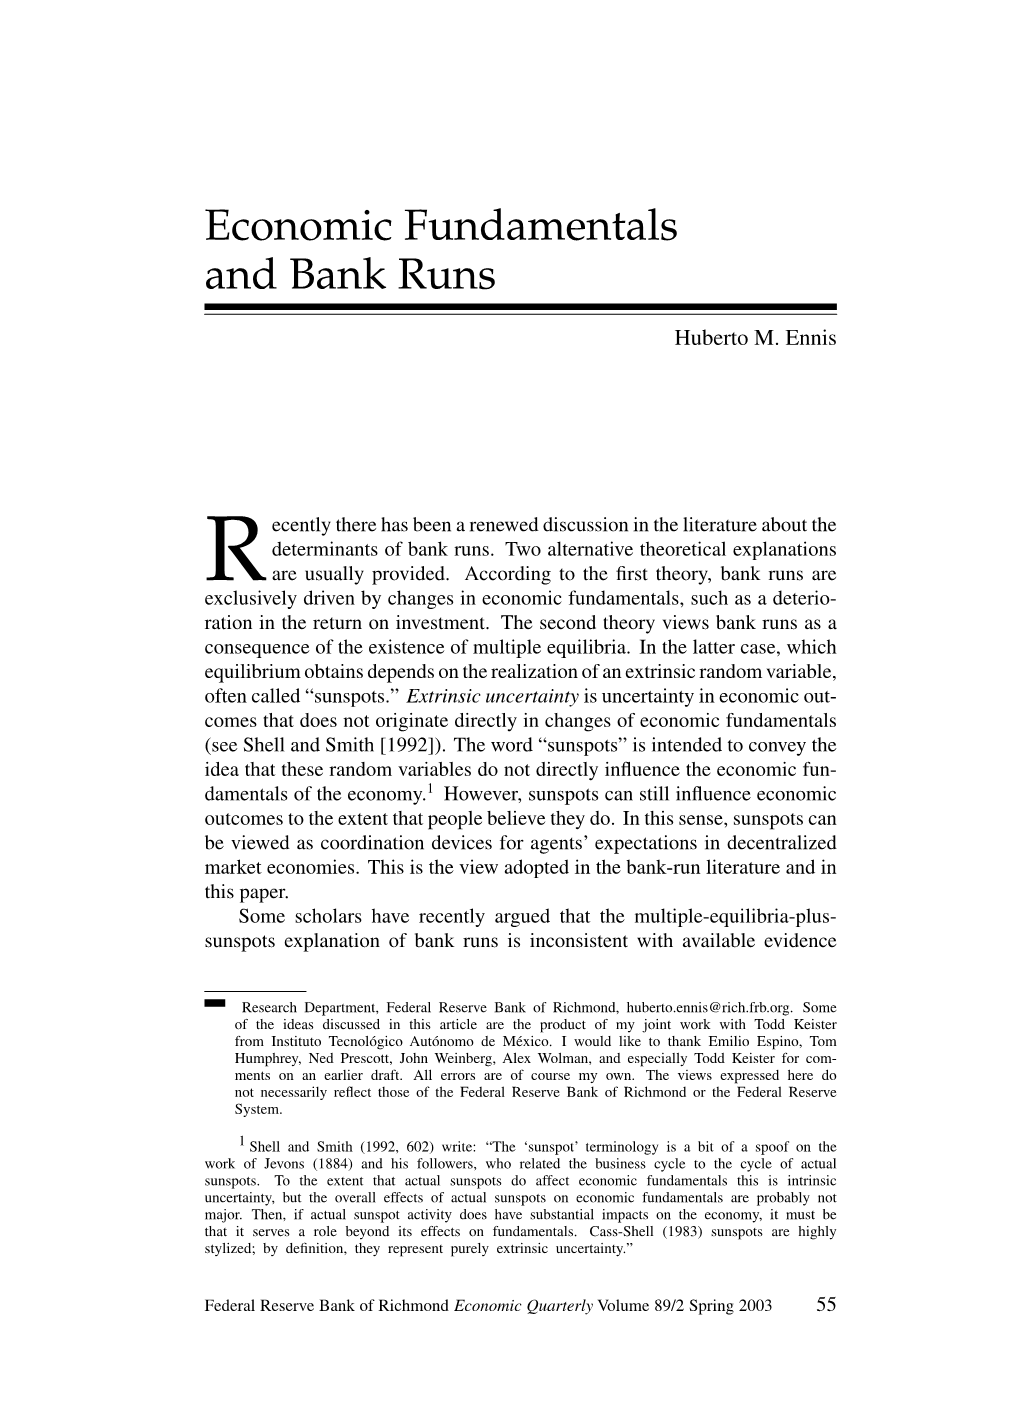 Economic Fundamentals and Bank Runs